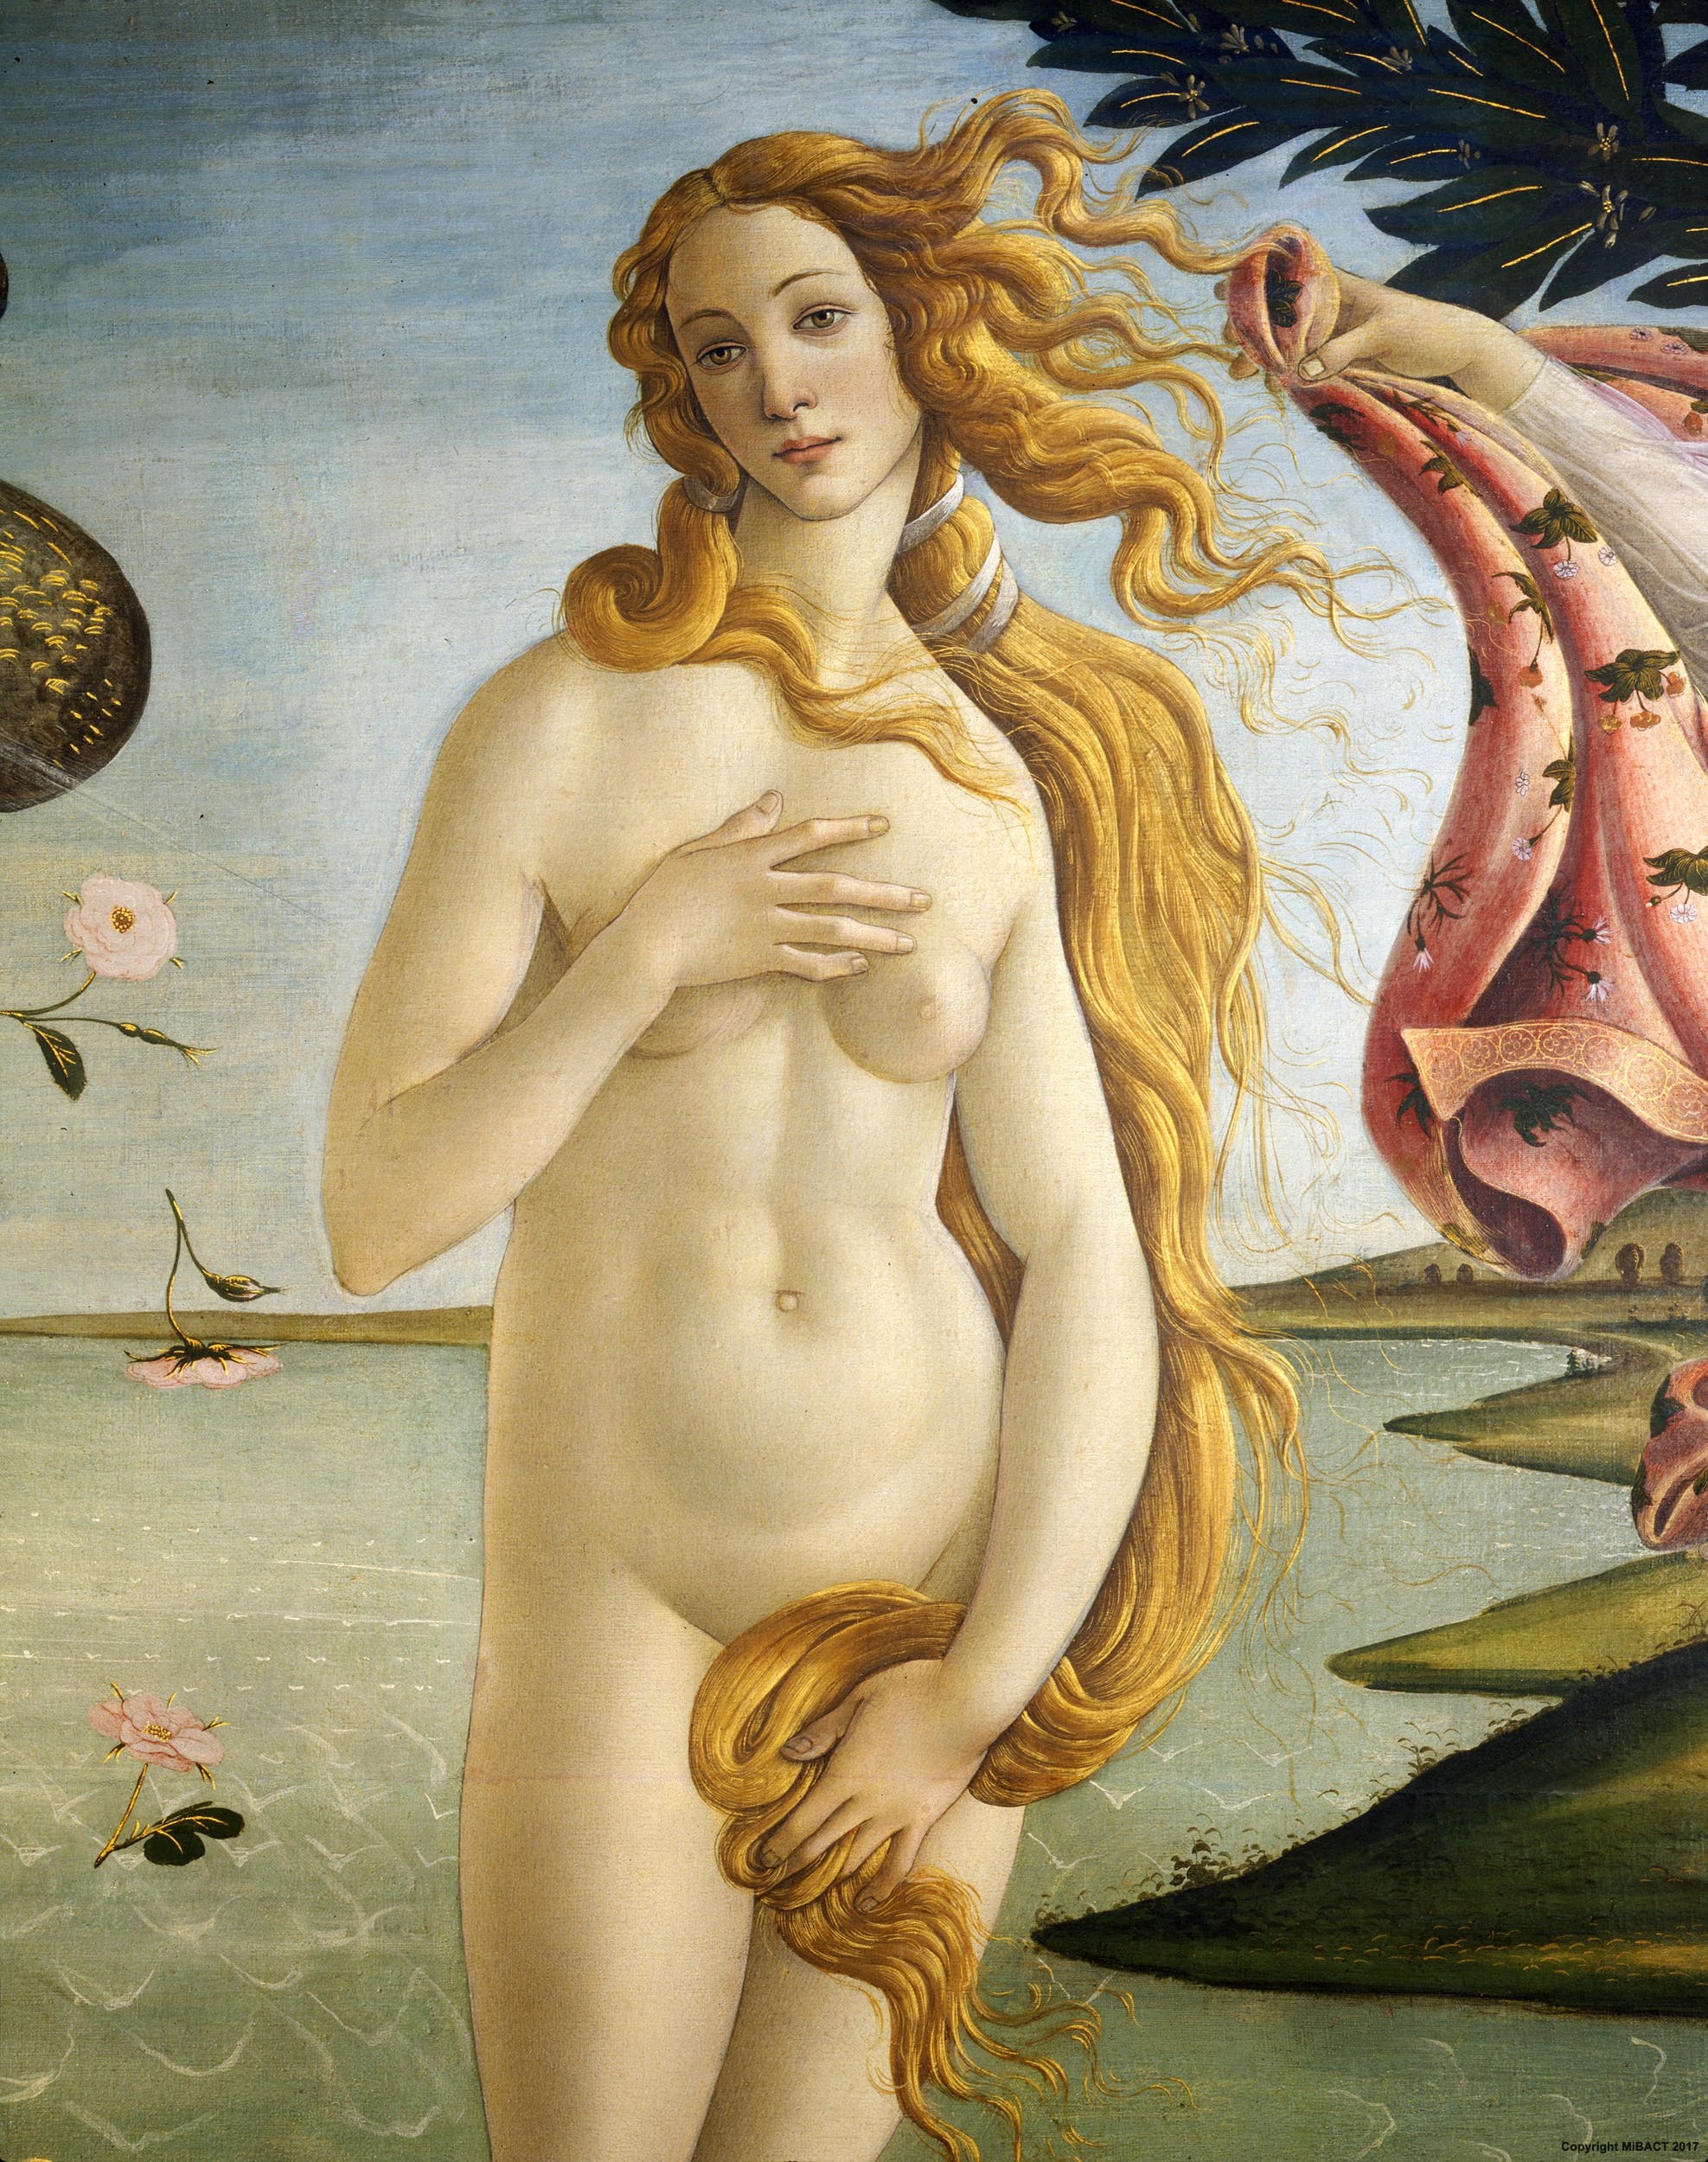 Detail of Venus, the pagan goddess of love.